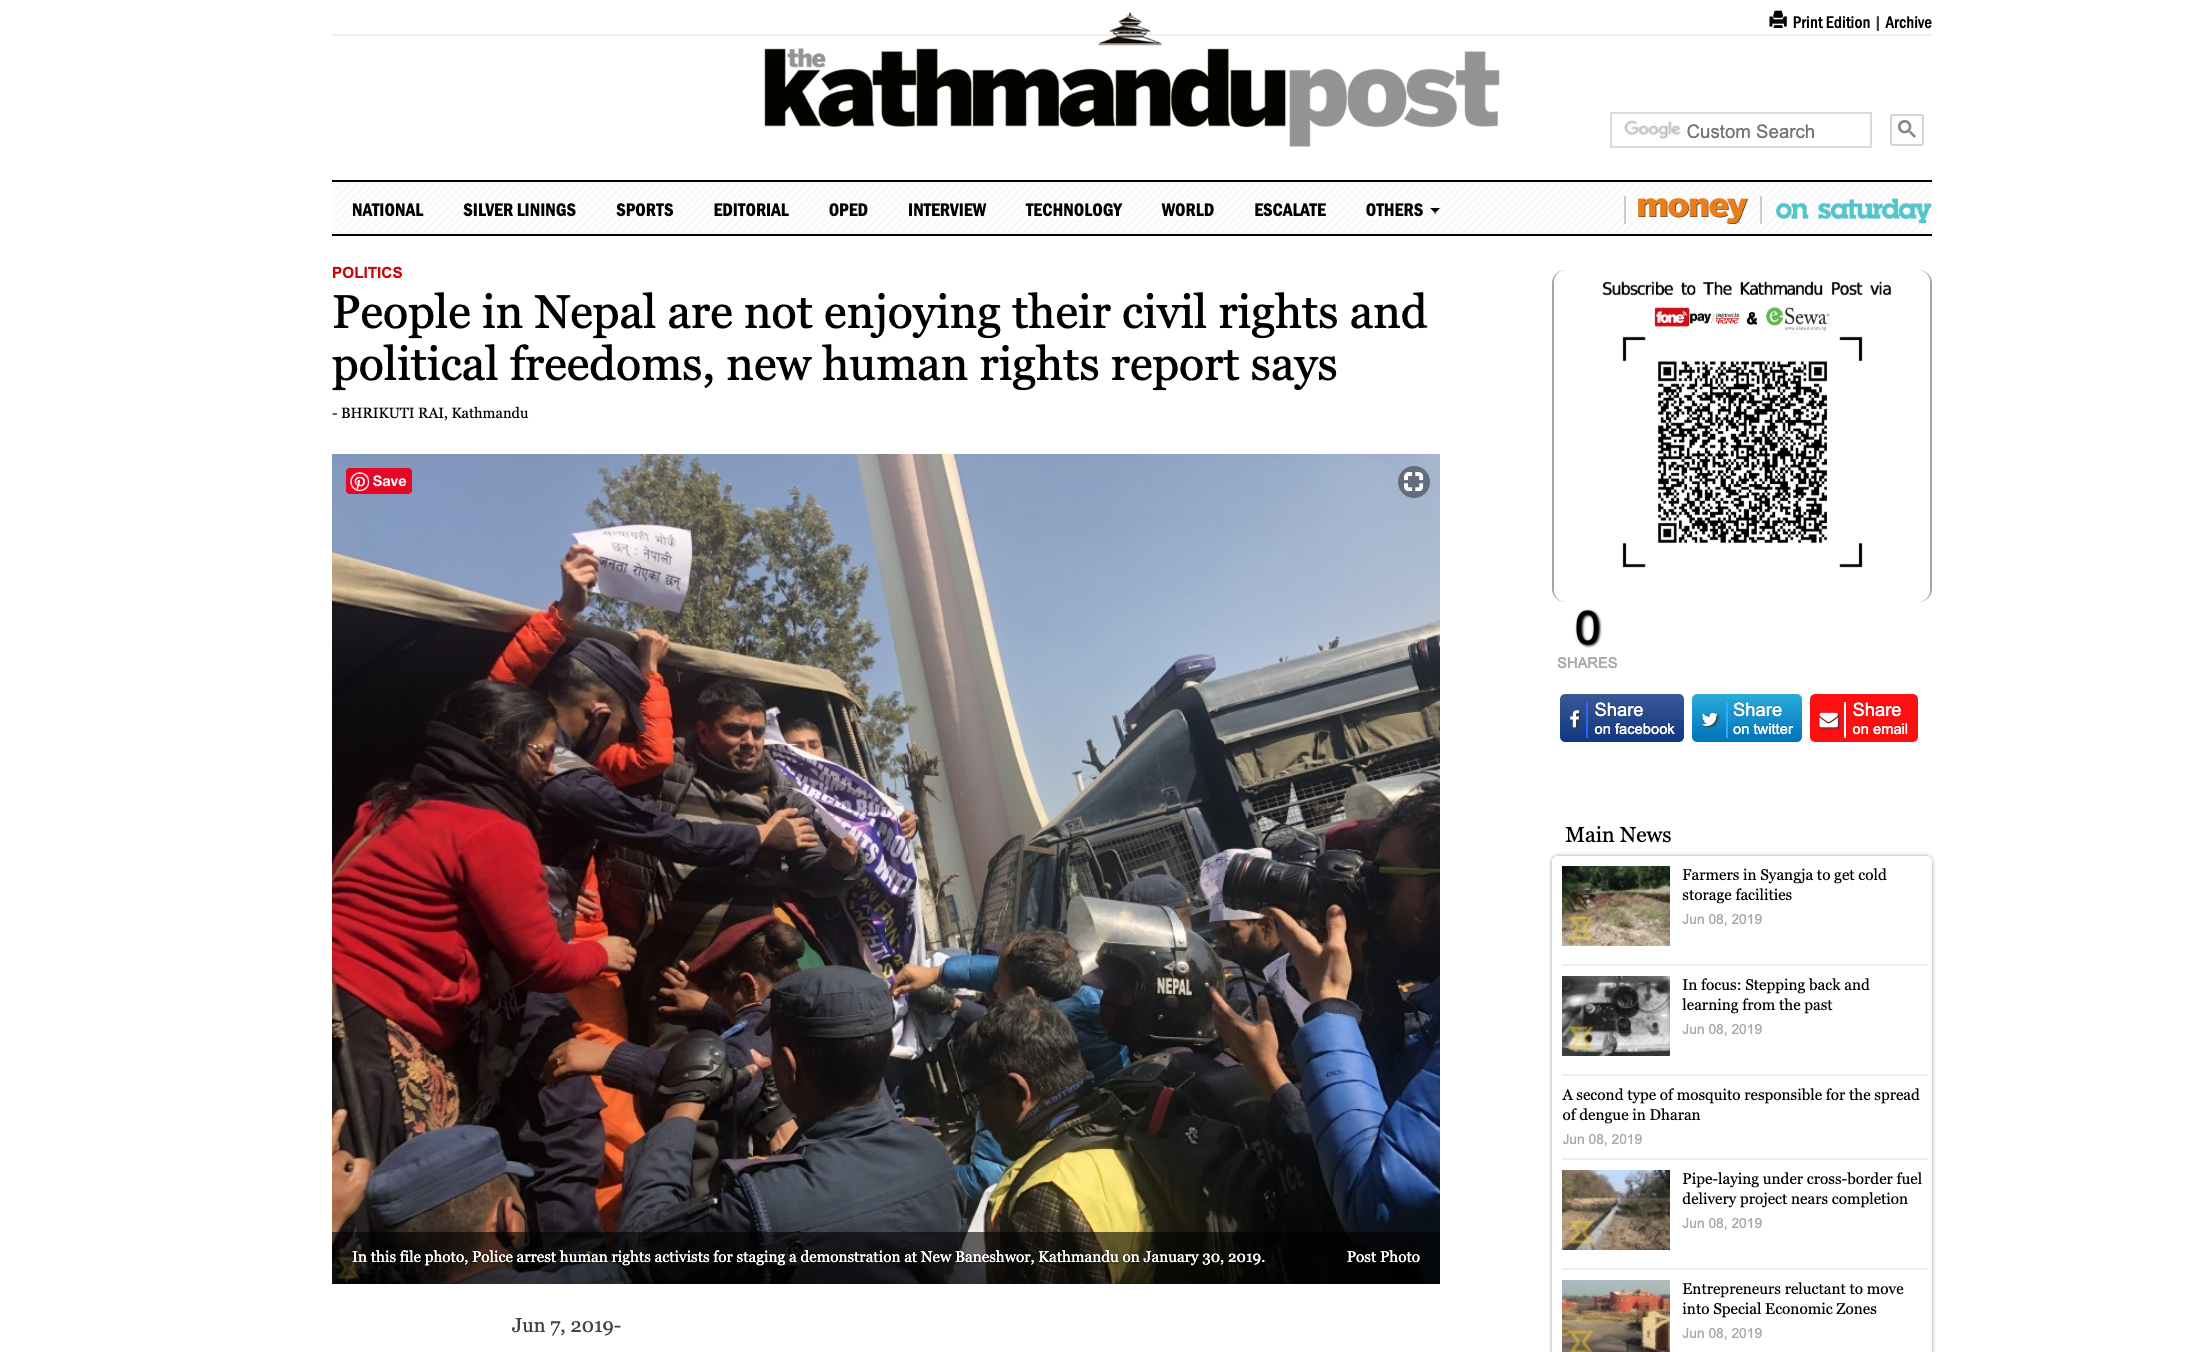 Screenshot showing article on HRMI in The Kathmandu Post